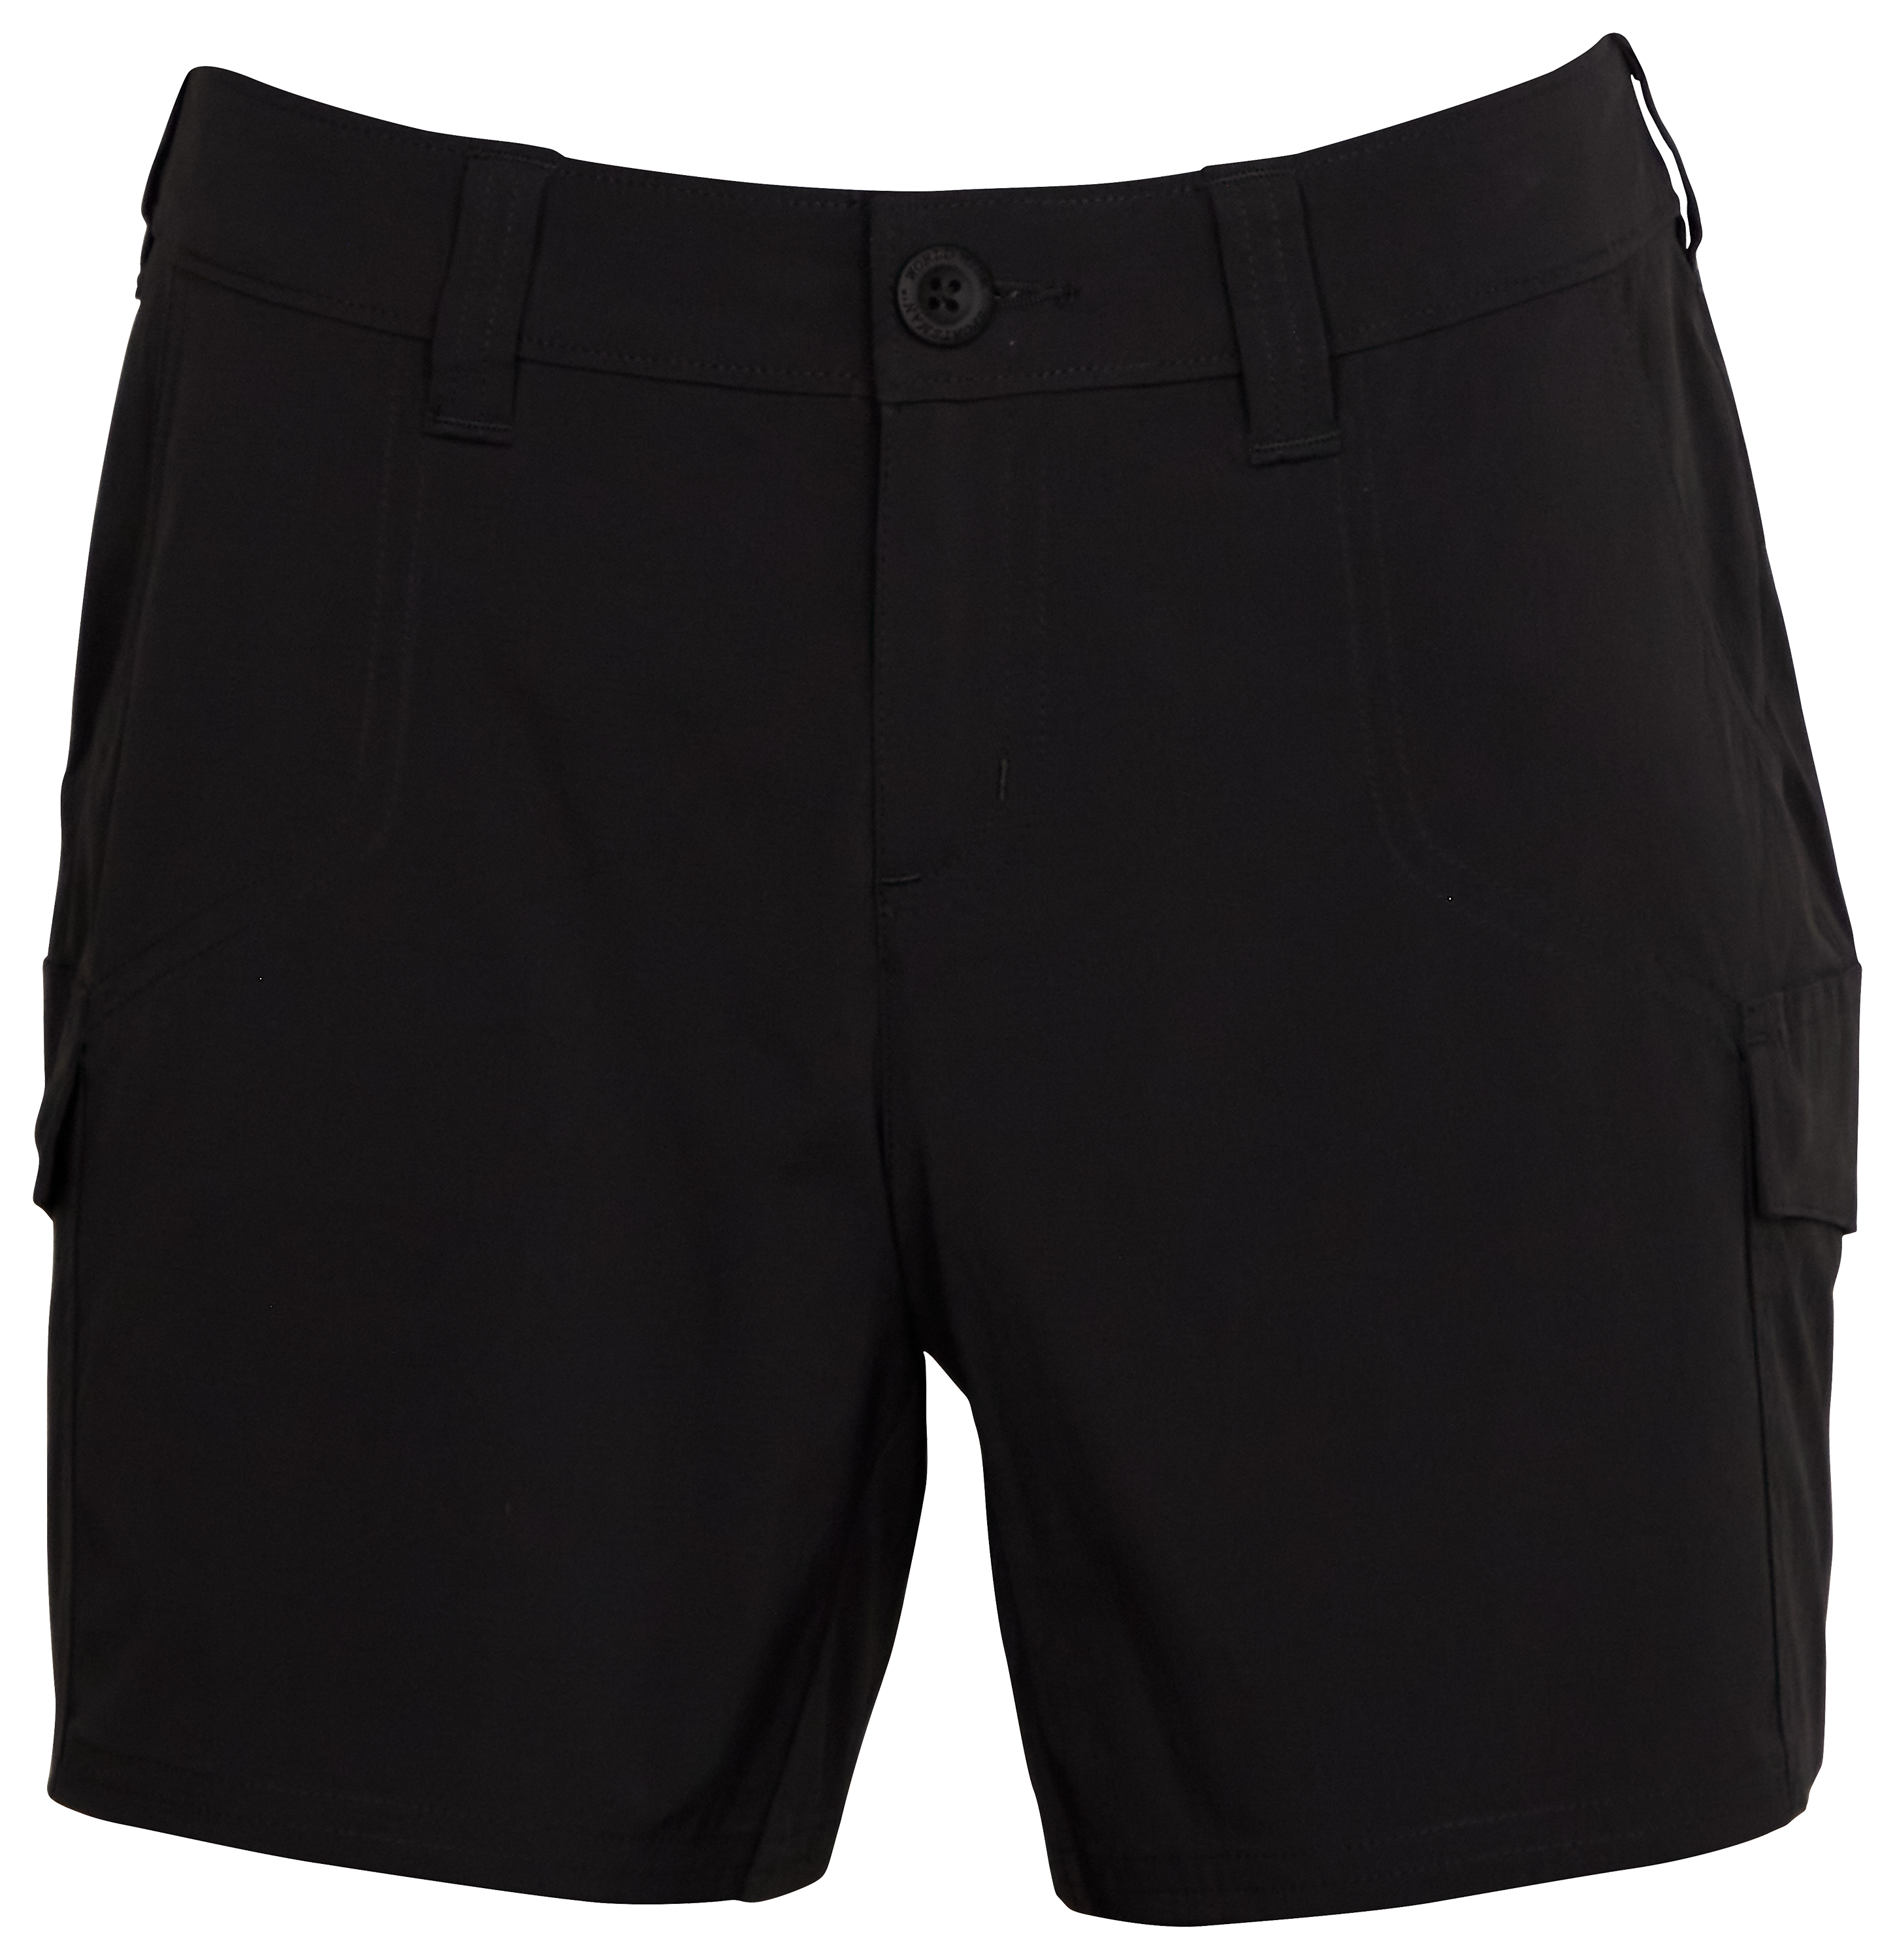 World Wide Sportsman Ripstop Cargo Shorts for Ladies - Jet Black - 18